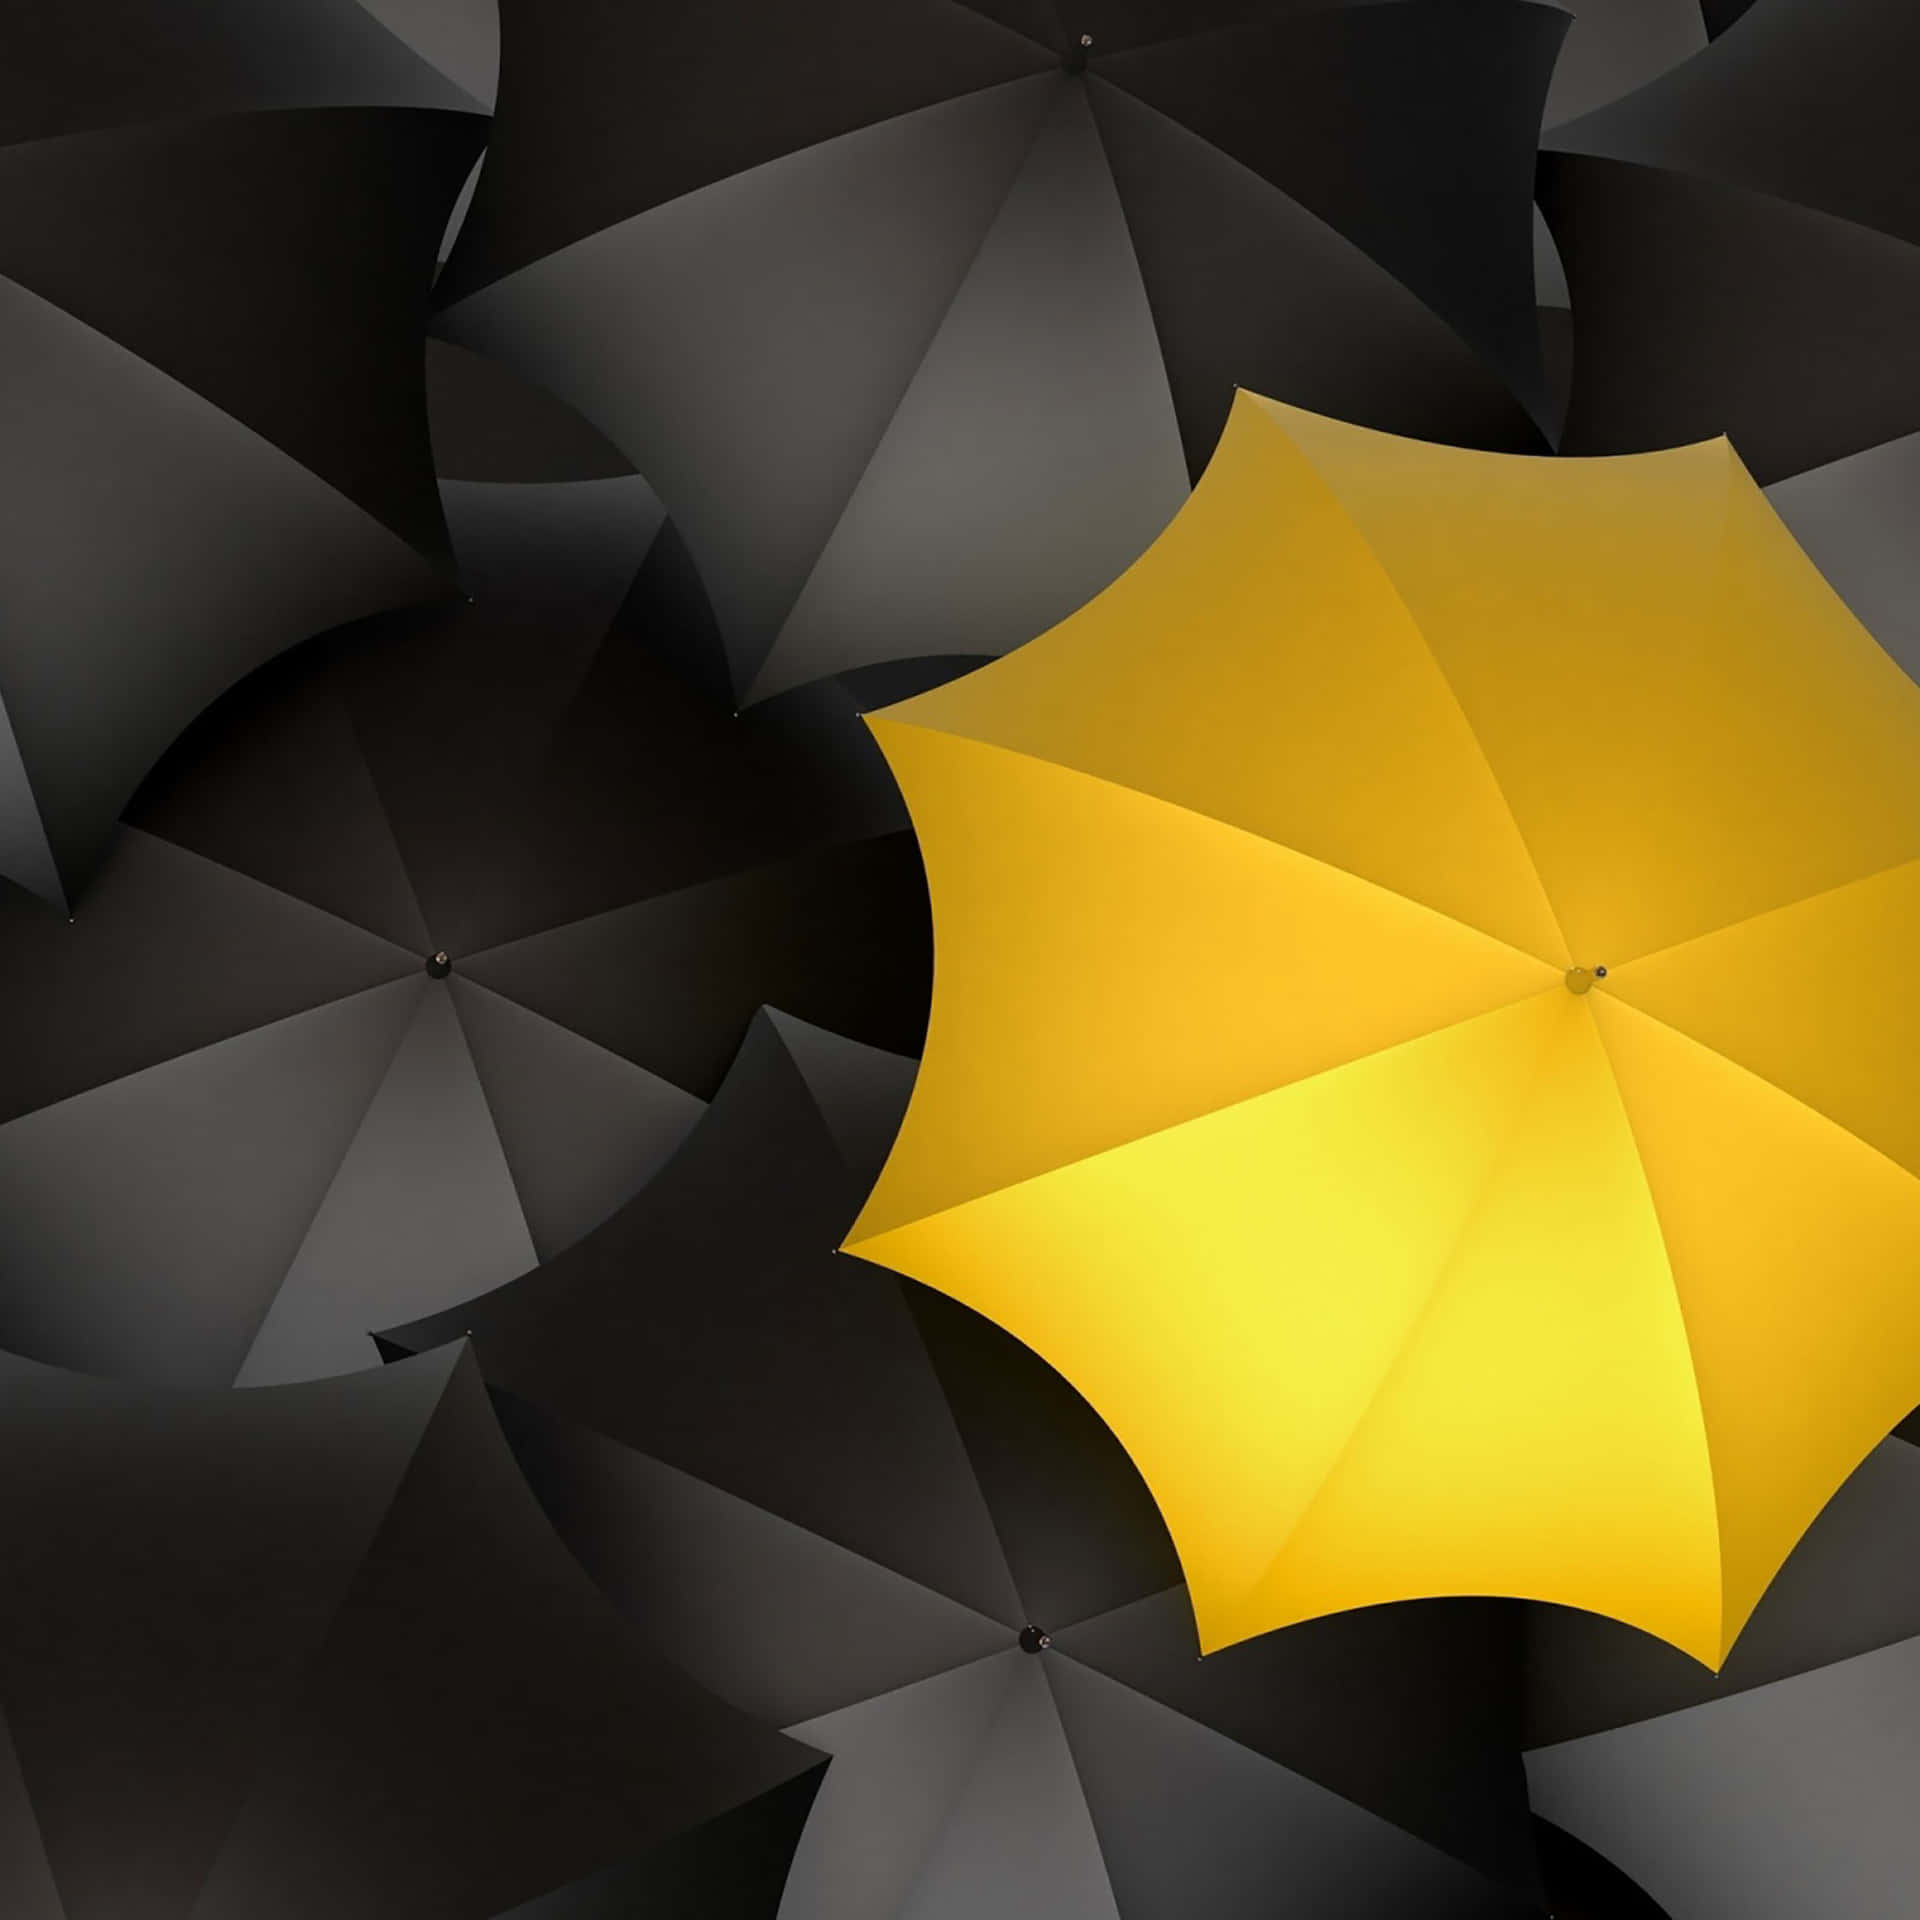 Vibrant Yellow iPad with Umbrella Illustration Wallpaper